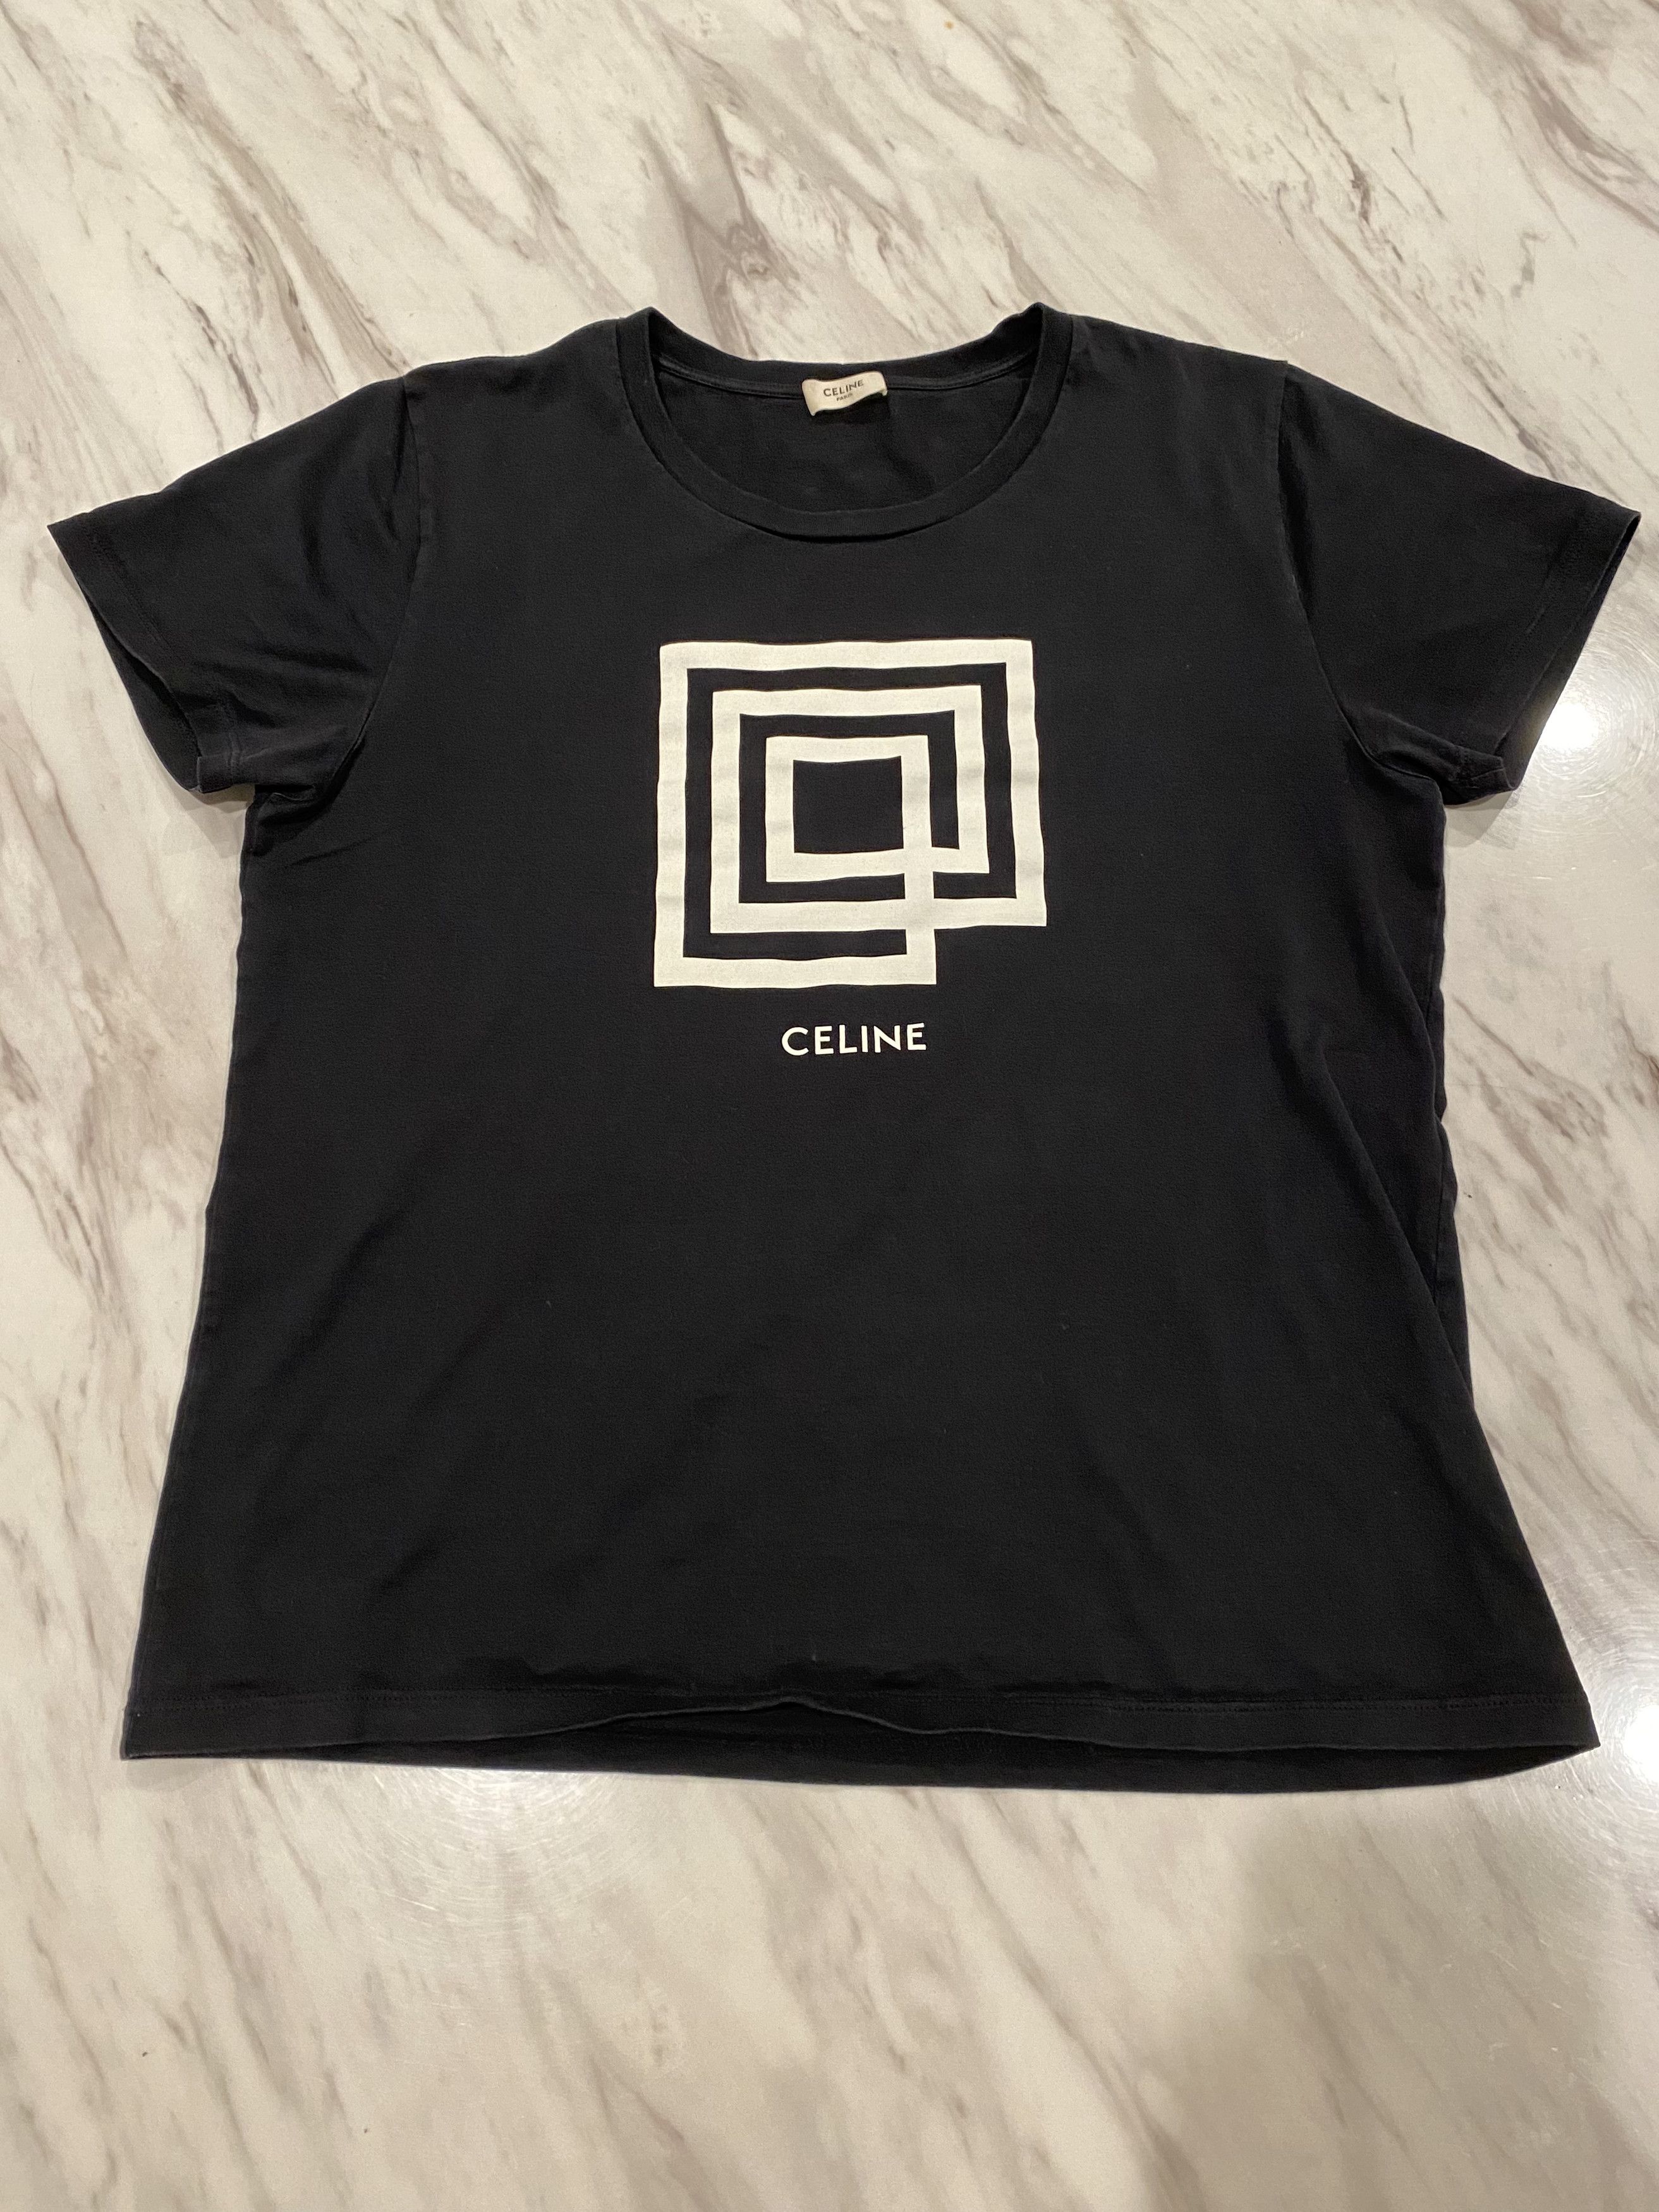 CELINE Tシャツ ラビリンスロゴ XS-